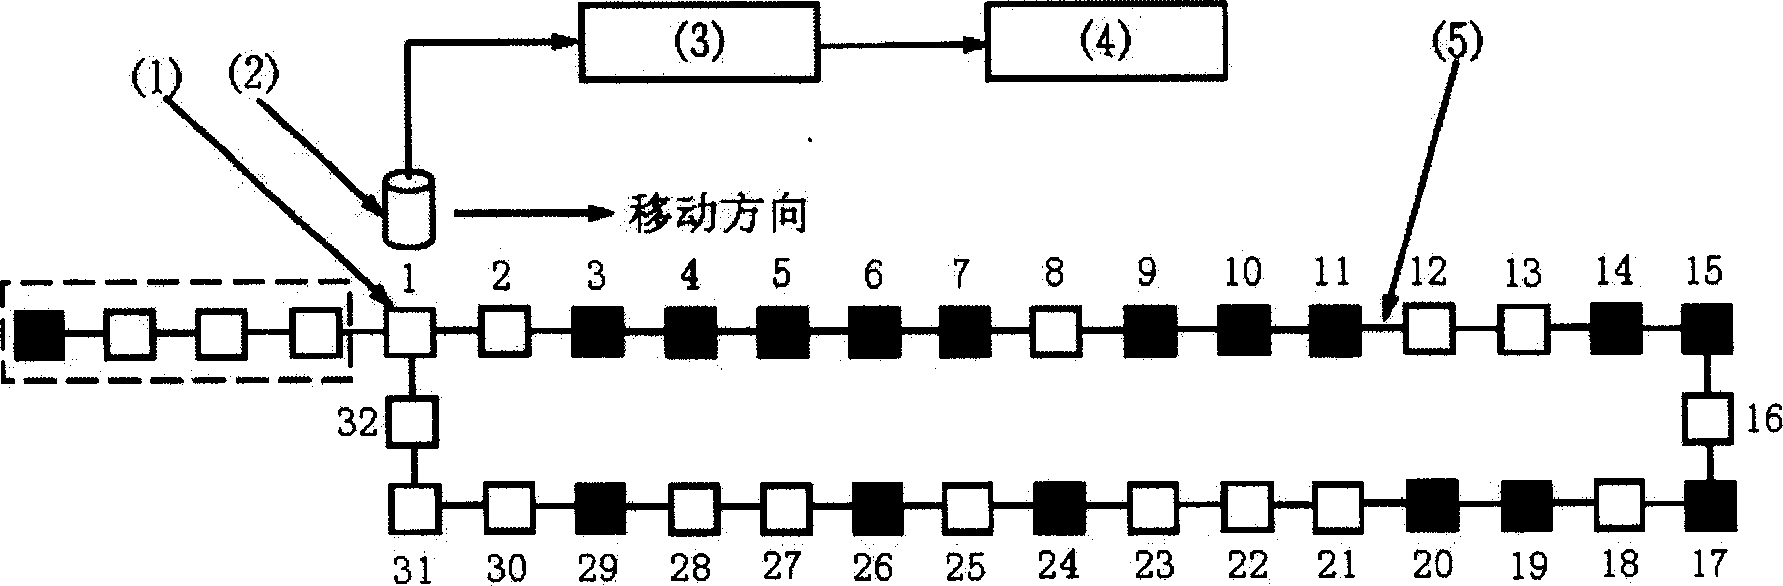 Absolute position mark method for rail line